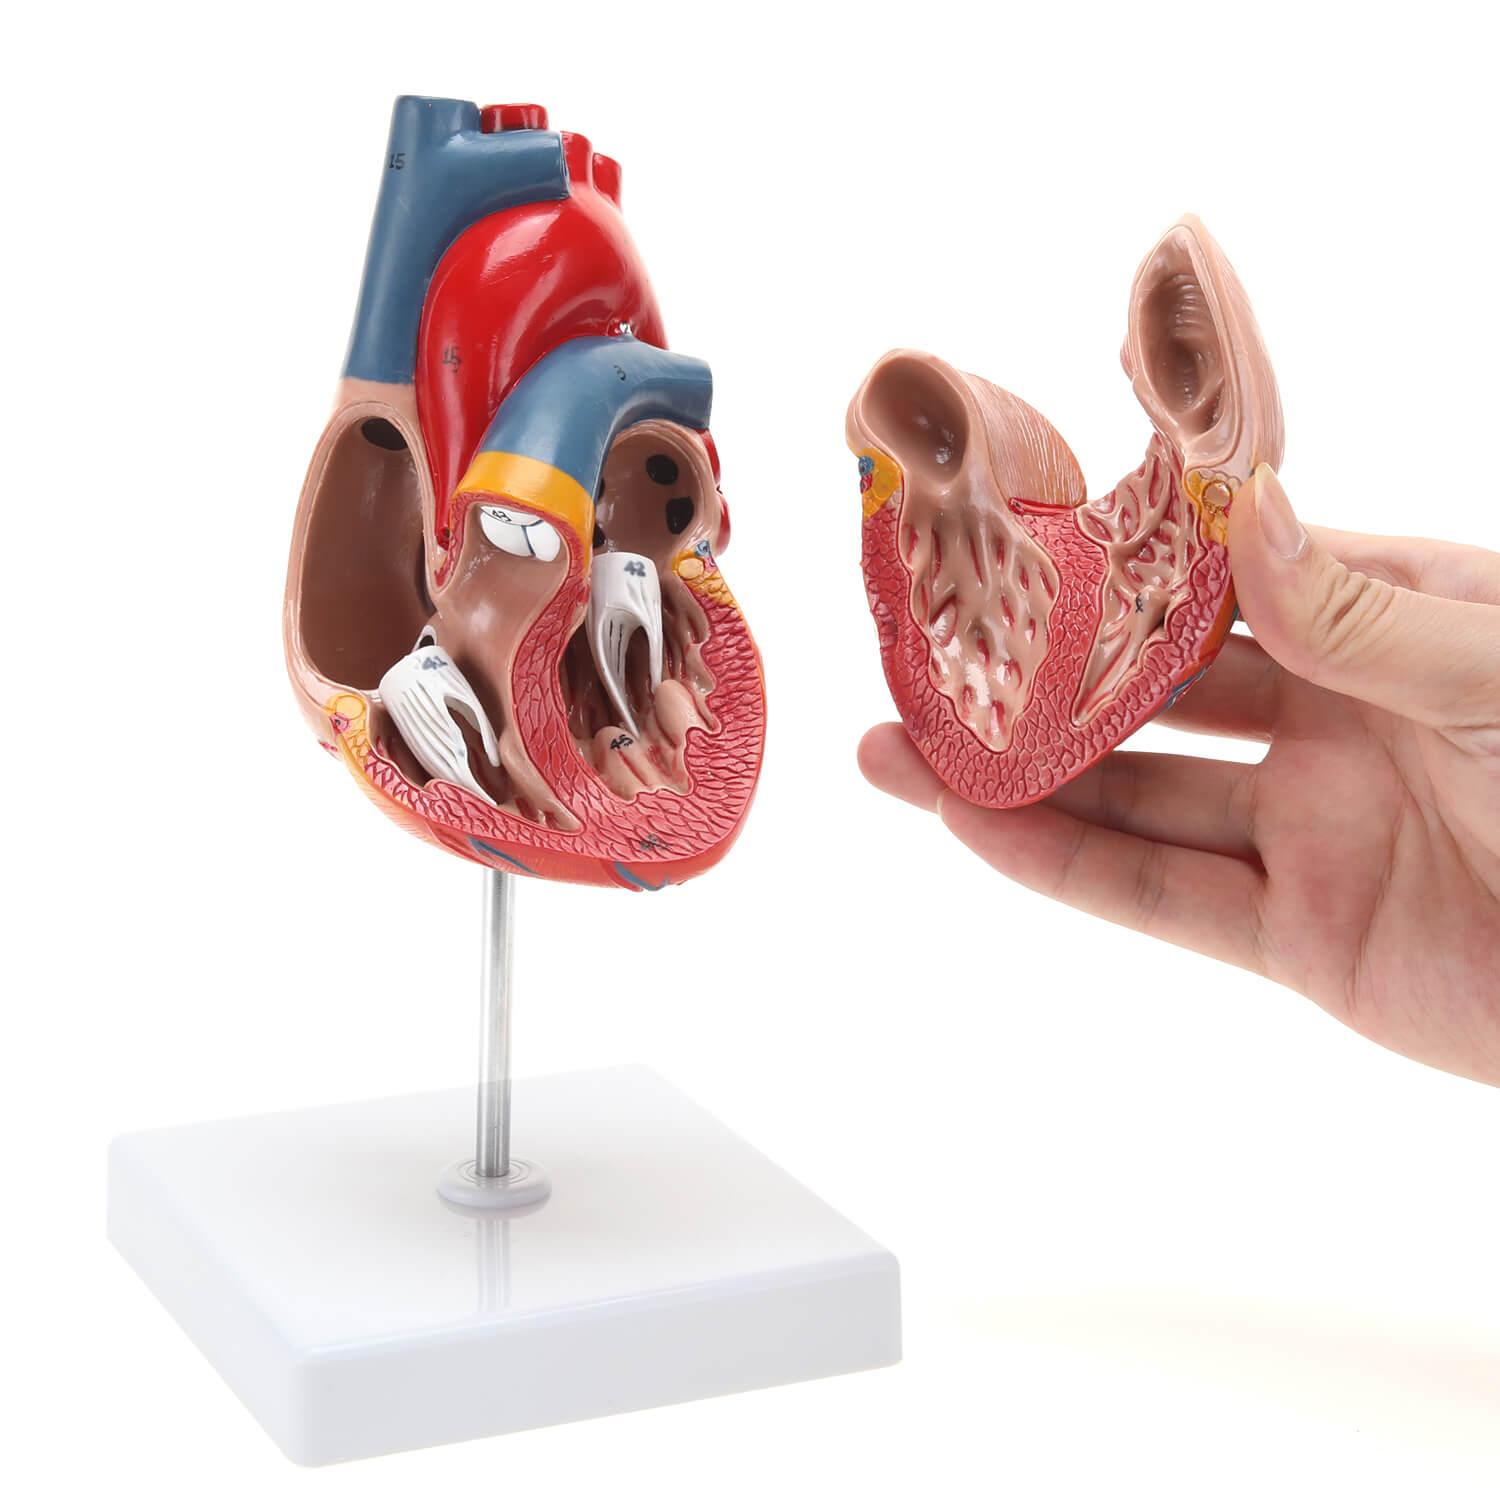 Human Heart Model,anatomical models,medical education models,teaching models,RONTEN,medical school,display model,,Life Size Anatomically Medical Heart Model